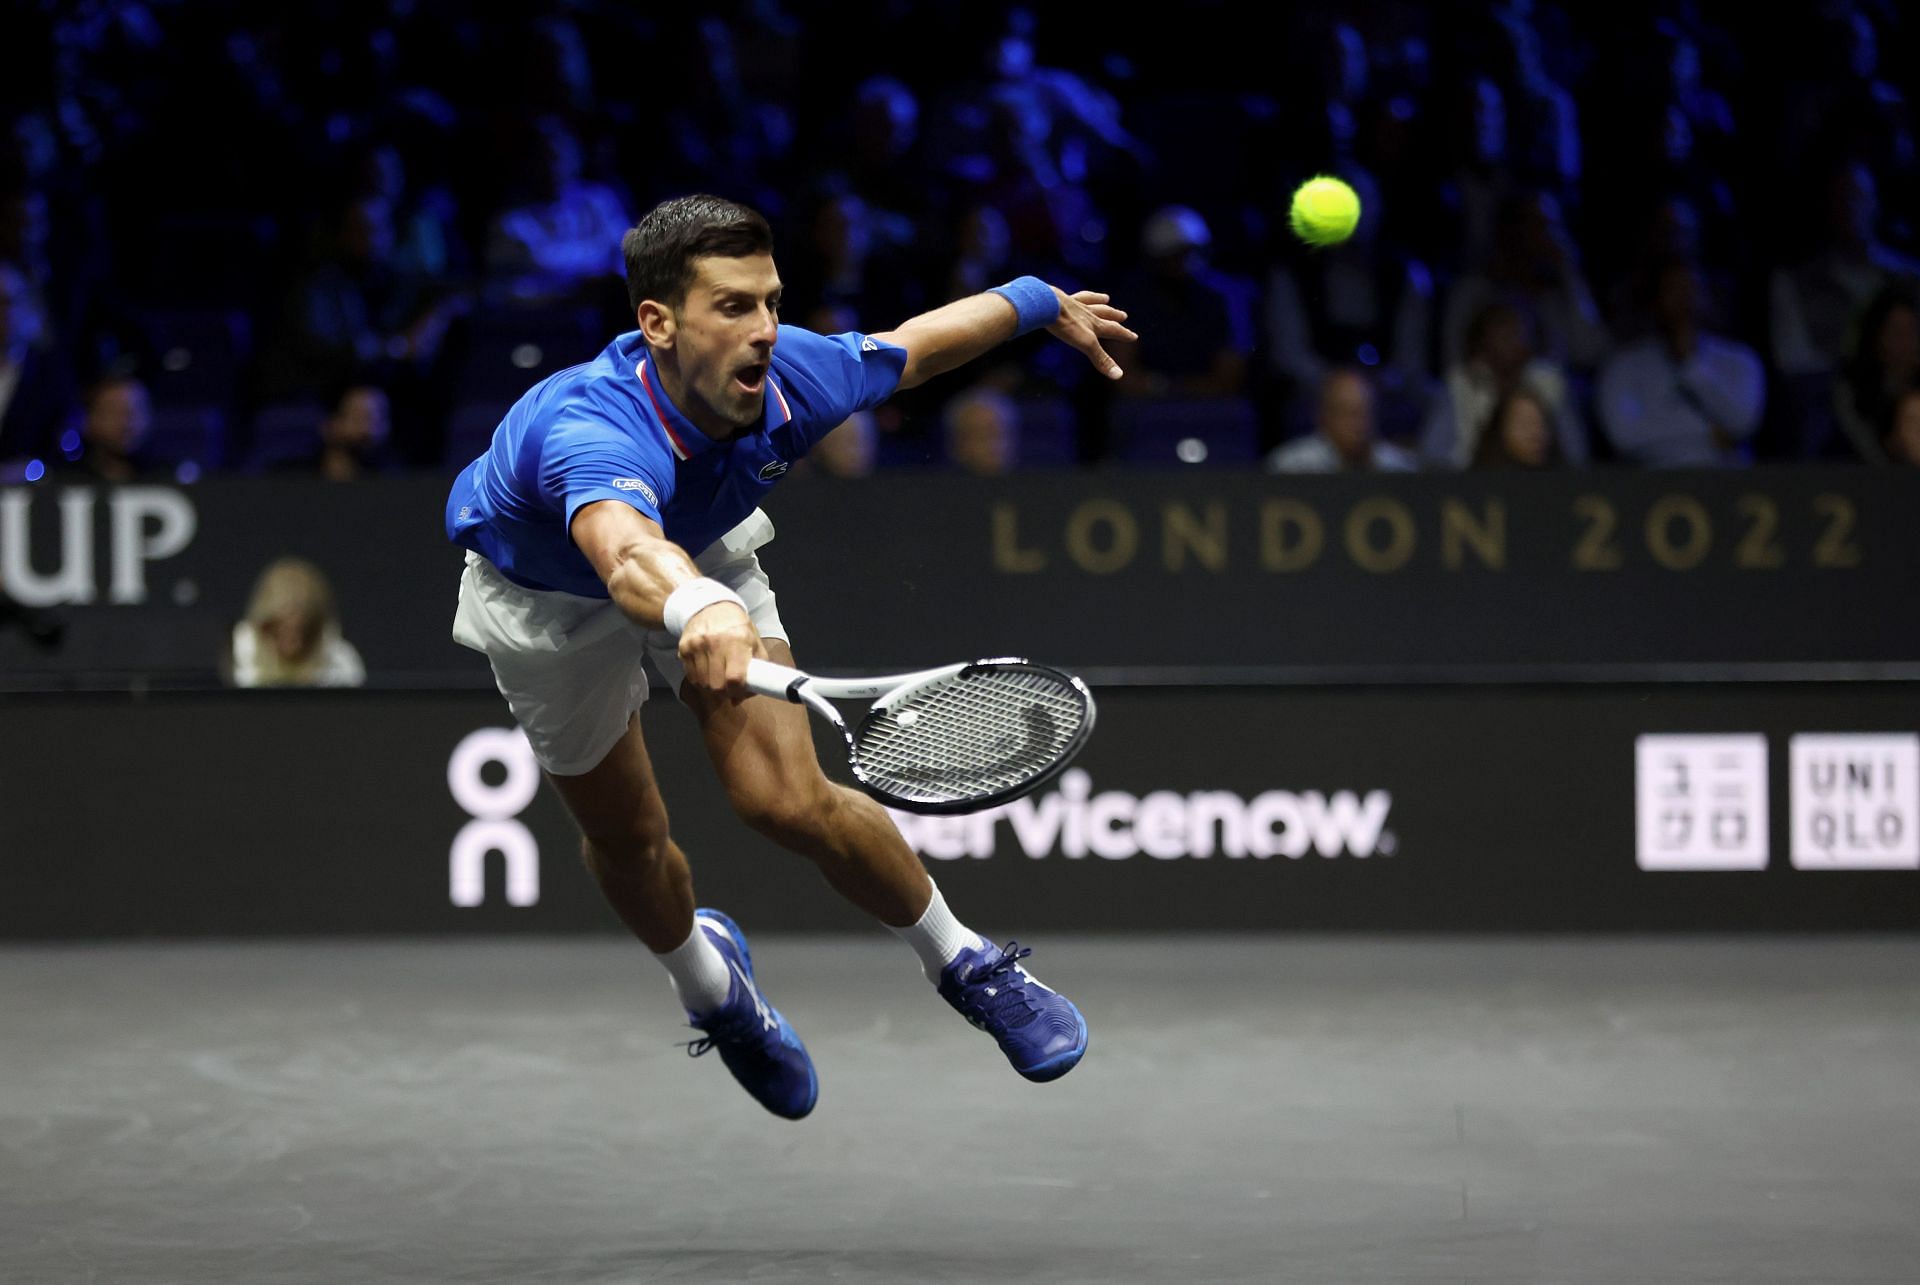 Novak Djokovic will look to reach the final of the Tel Aviv Open